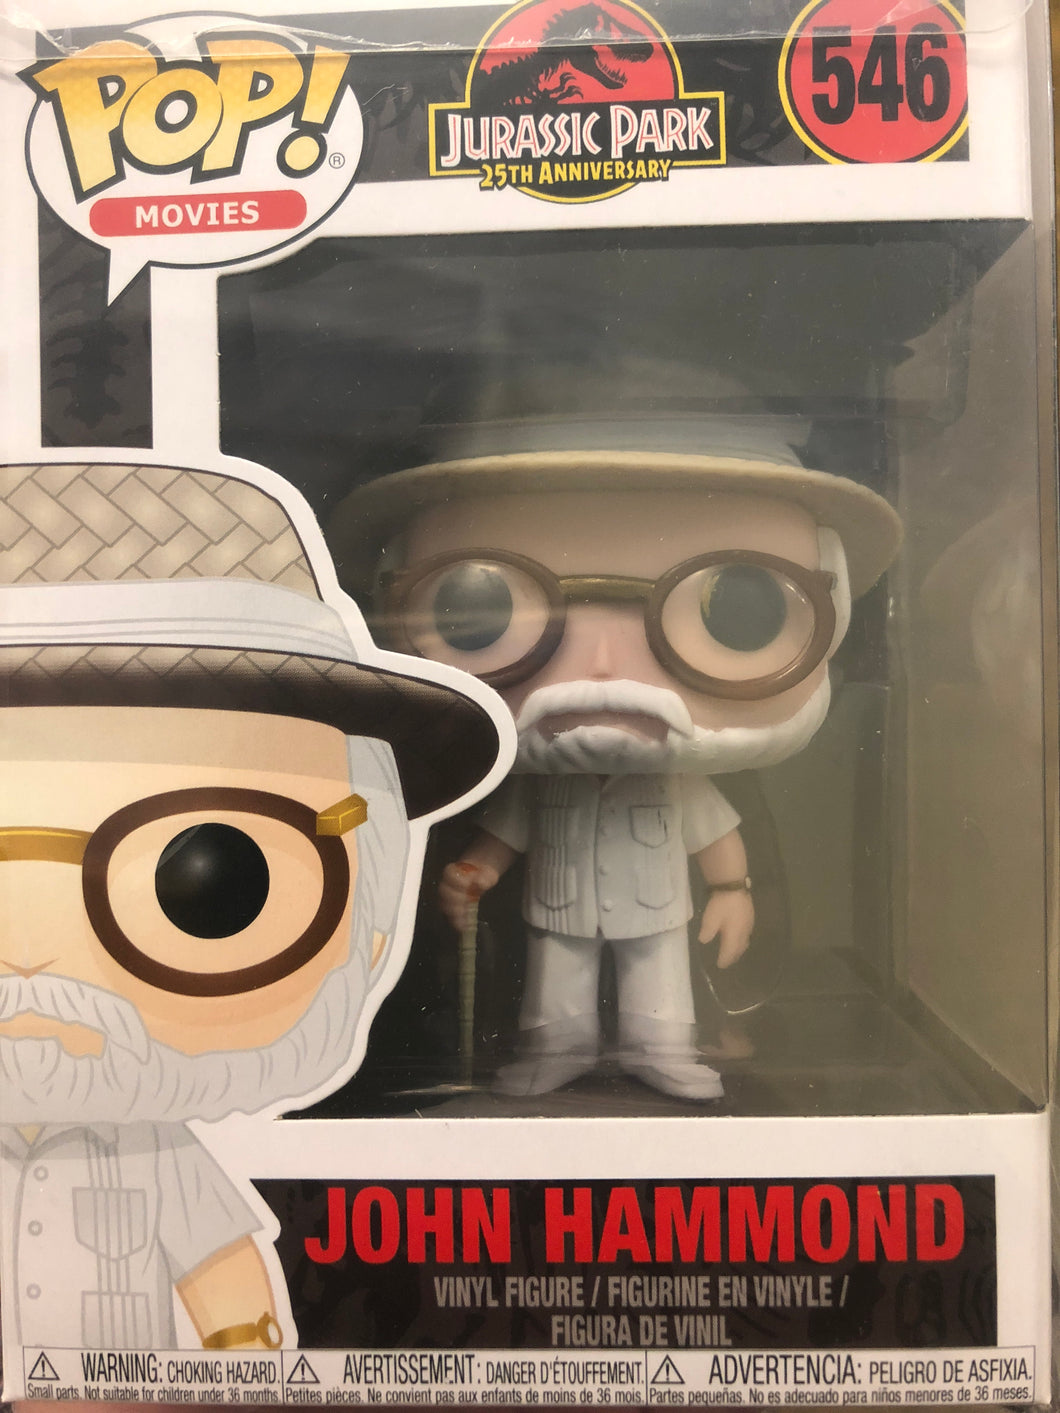 Funko Pop!: Jurassic Park: John Hammond